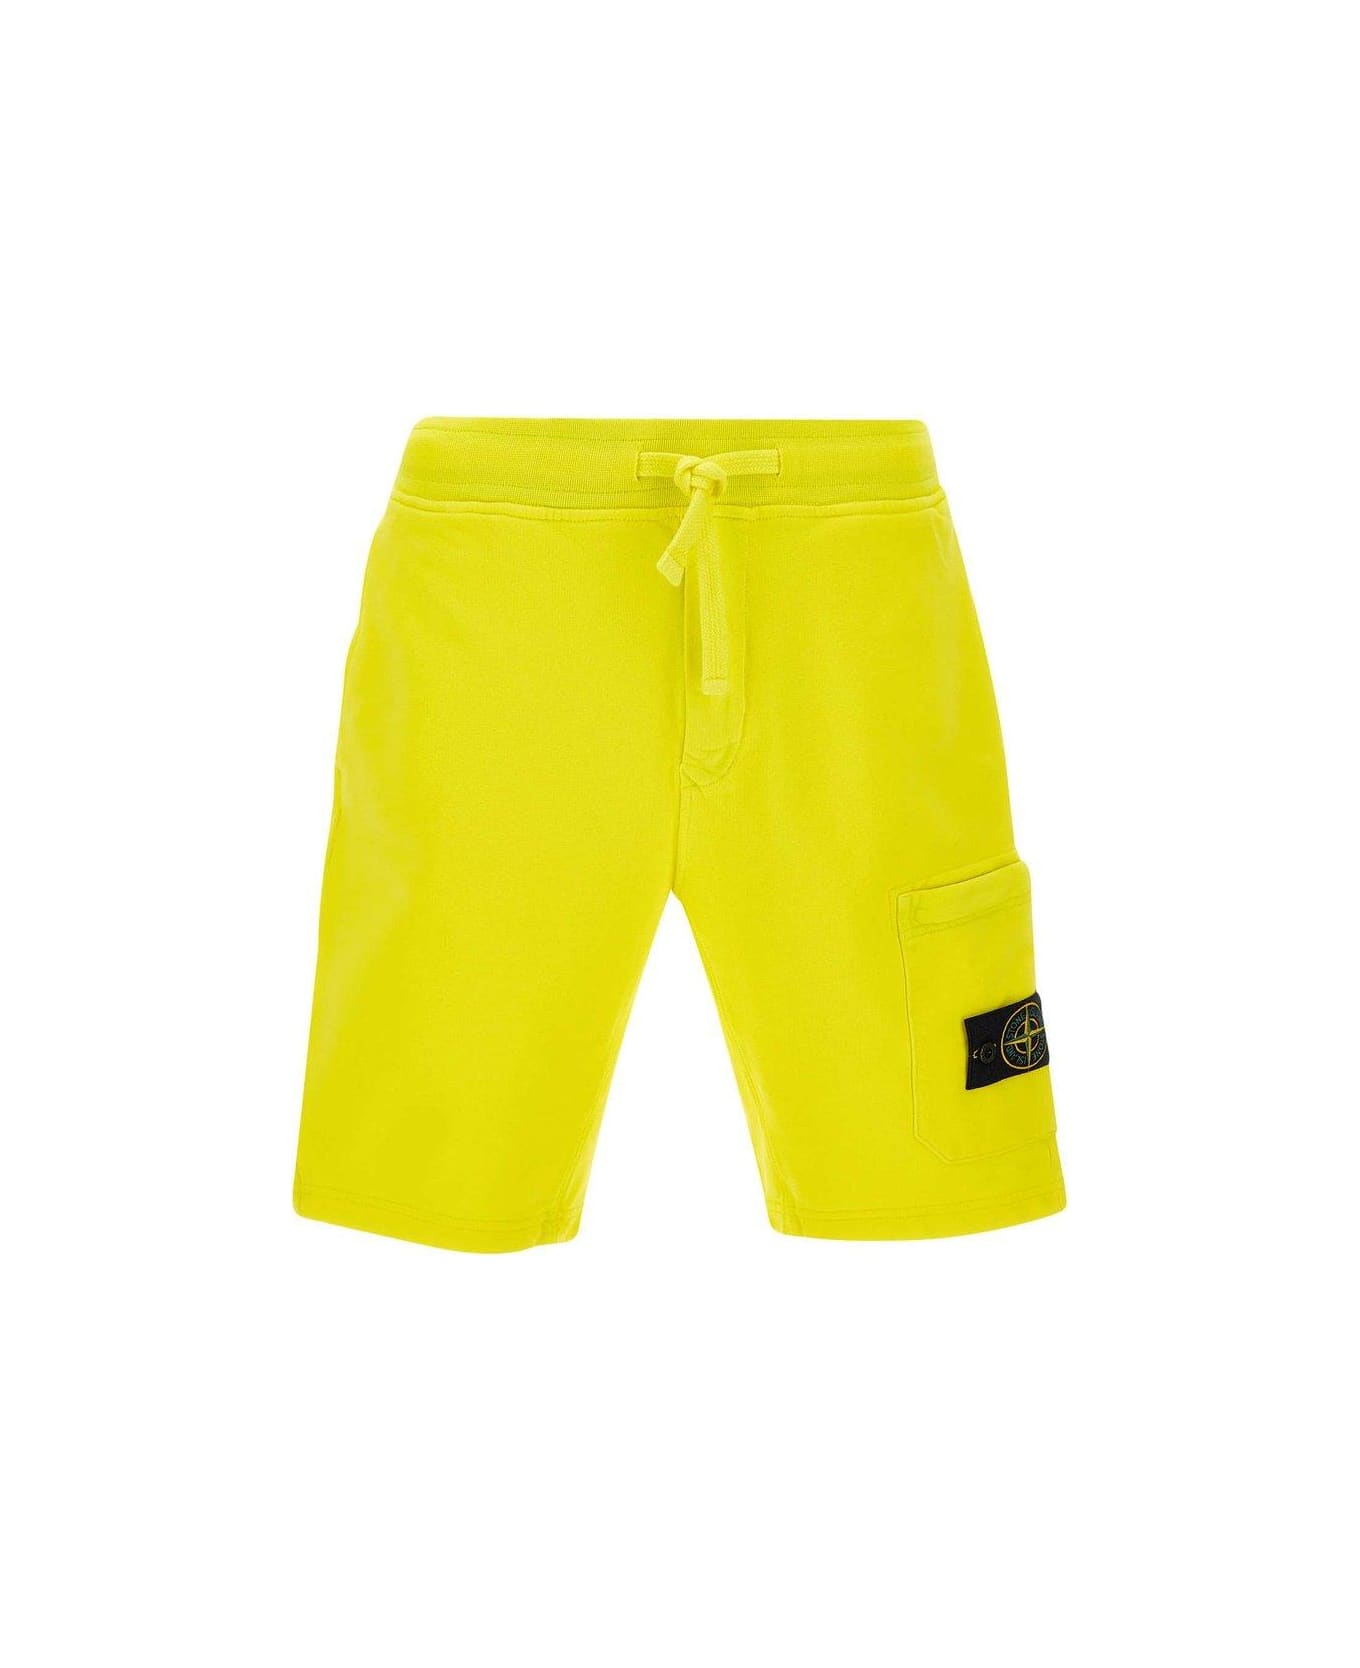 Stone Island Cotton Shorts - YELLOW ショートパンツ